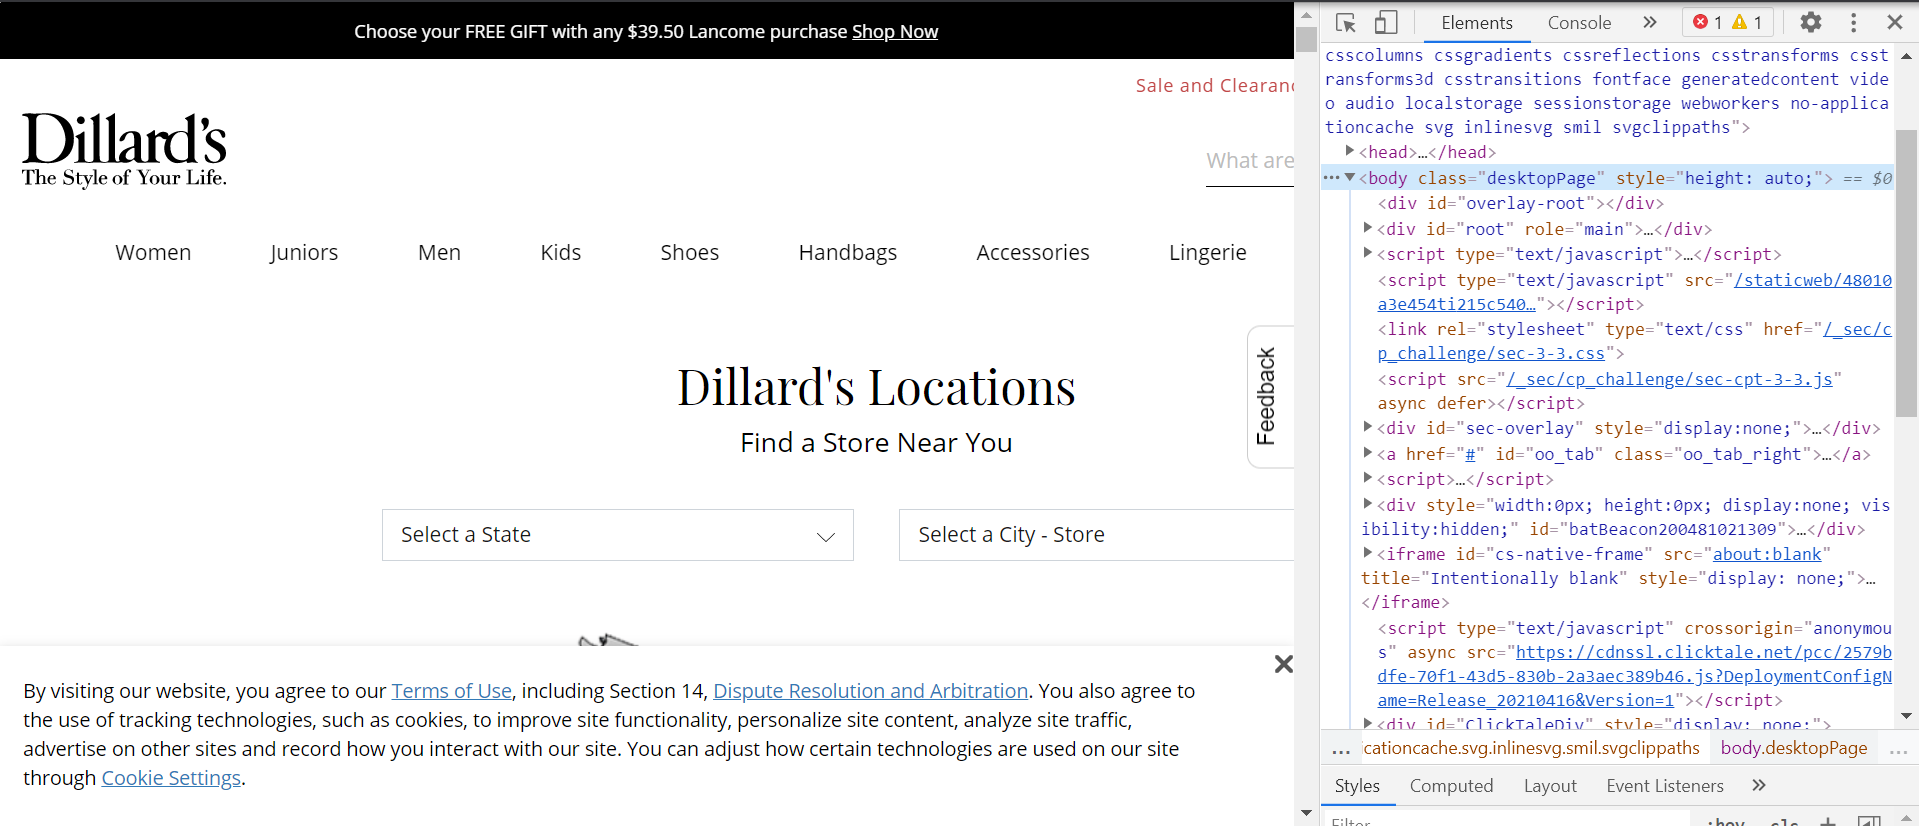 HTML source code for Dillard's store locator webpage